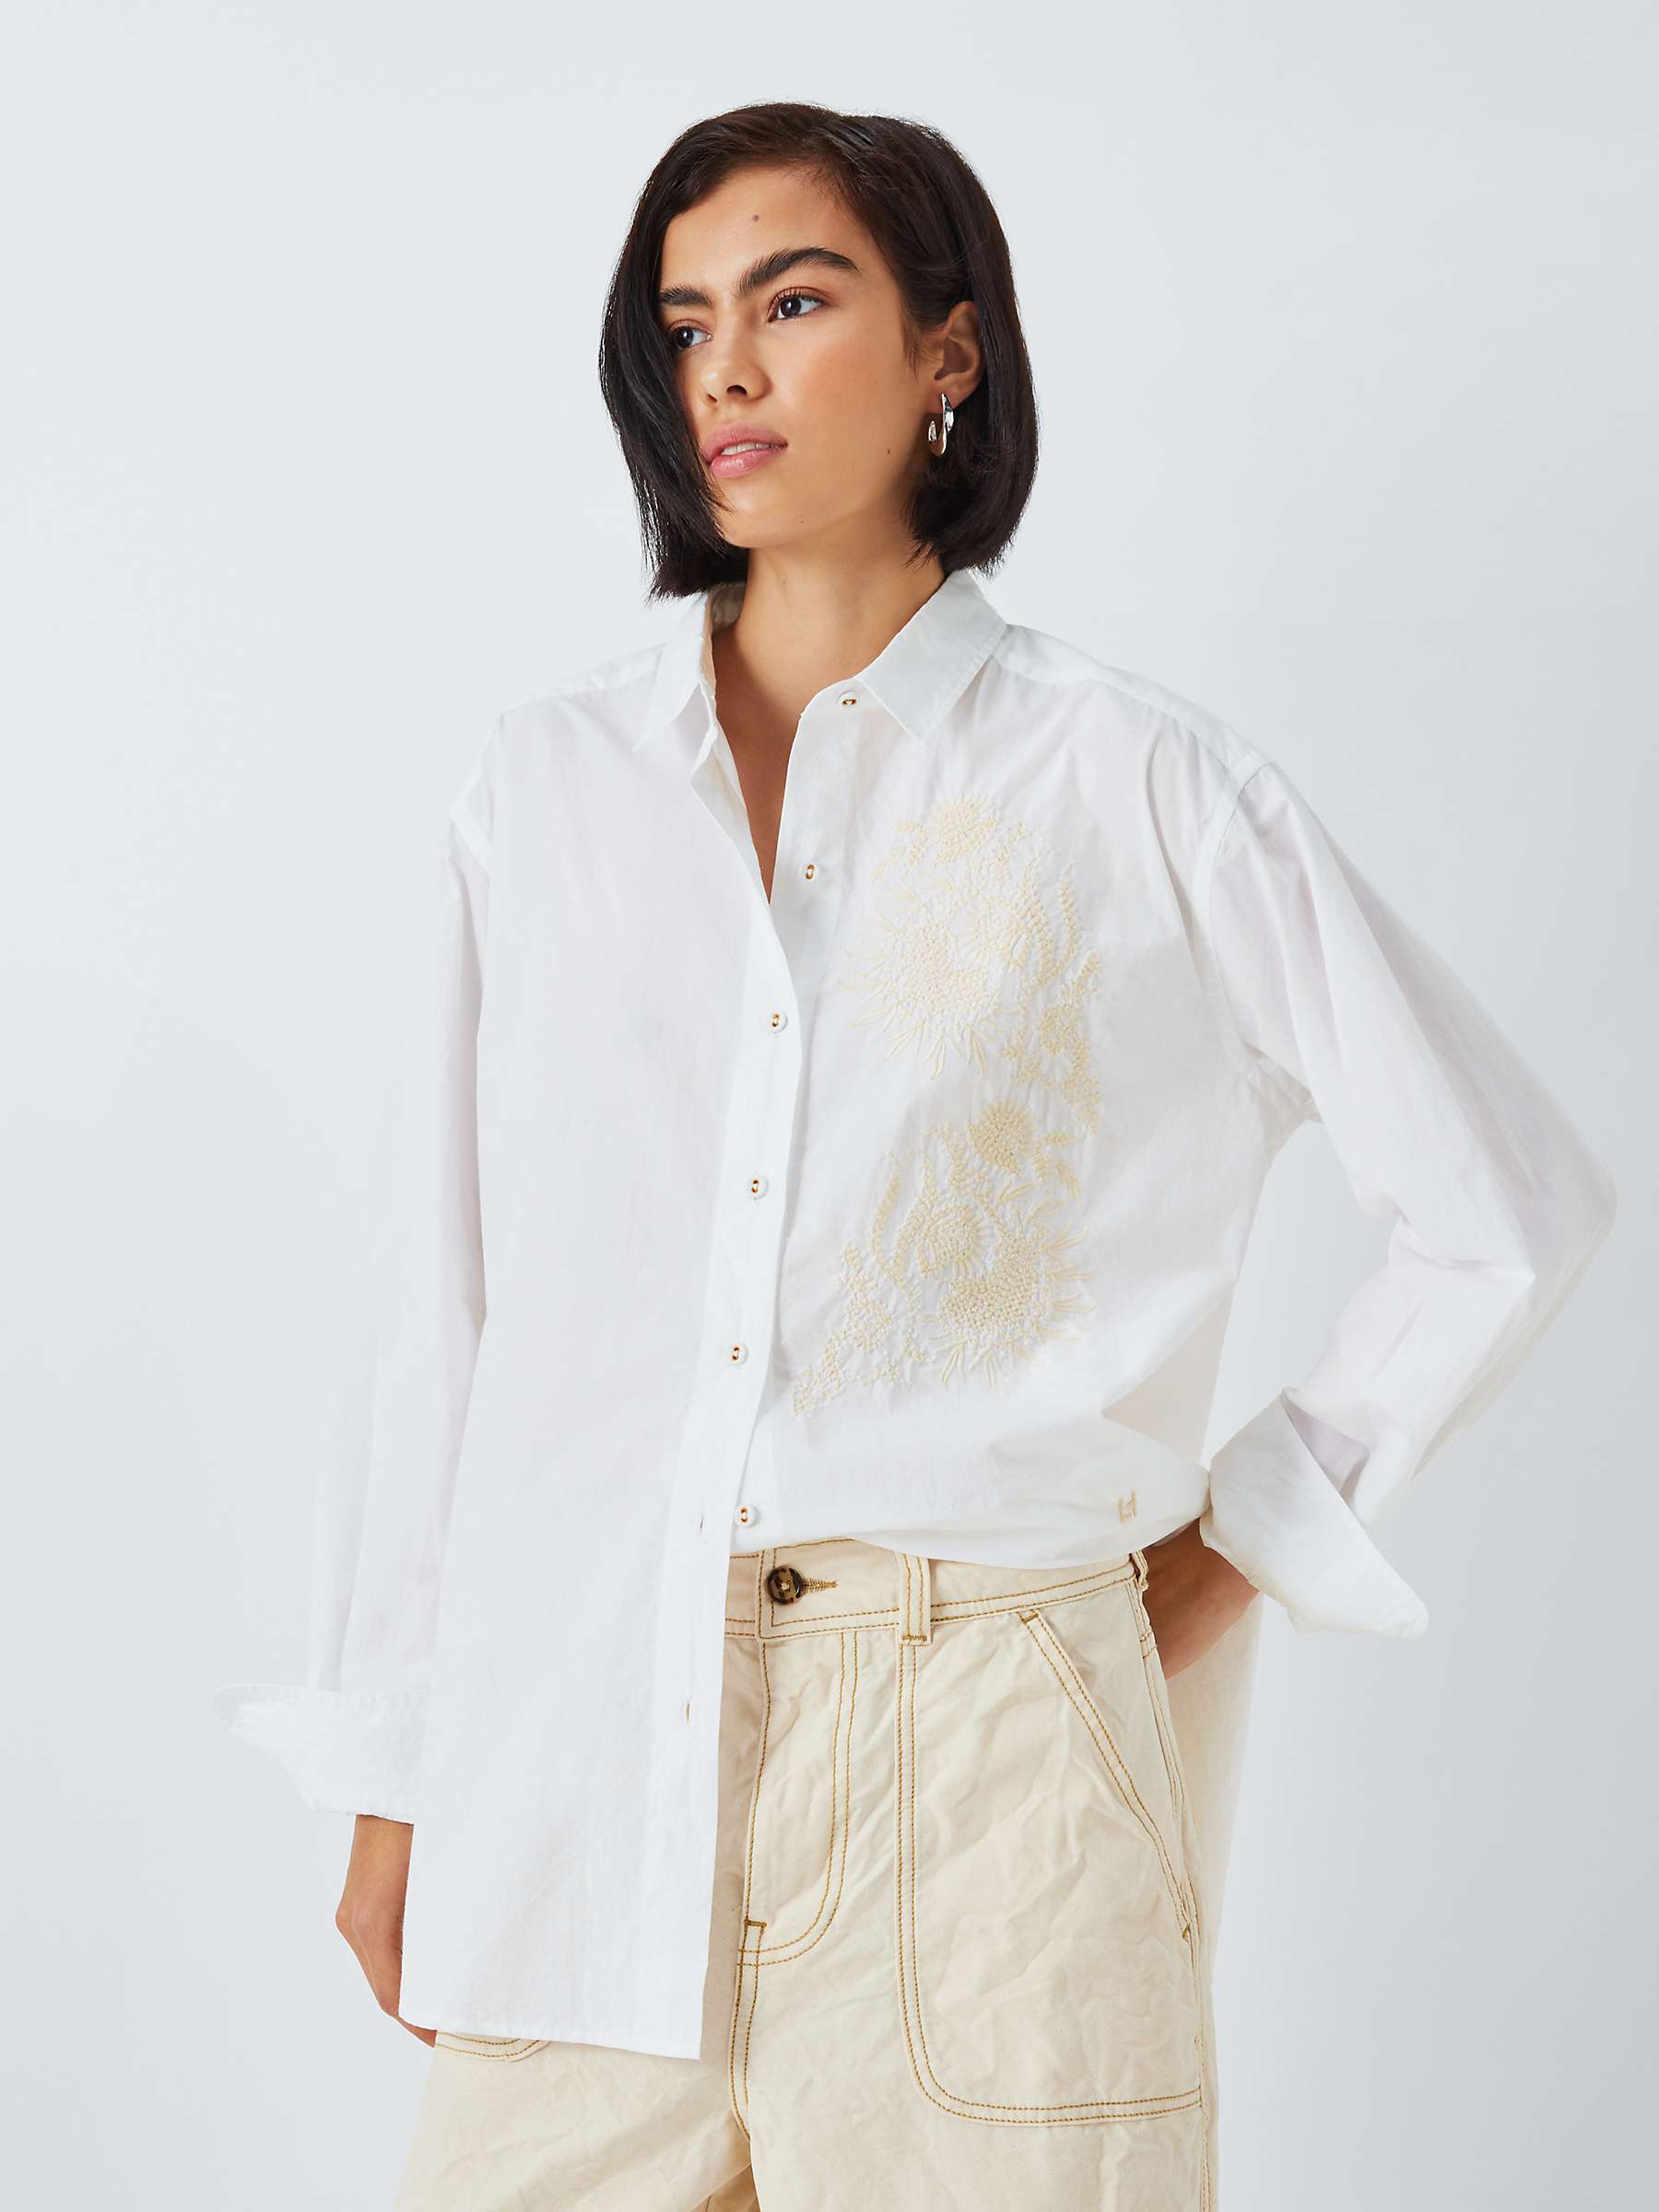 Buy Leon & Harper Cadeau Embroidered Shirt, White Online at johnlewis.com